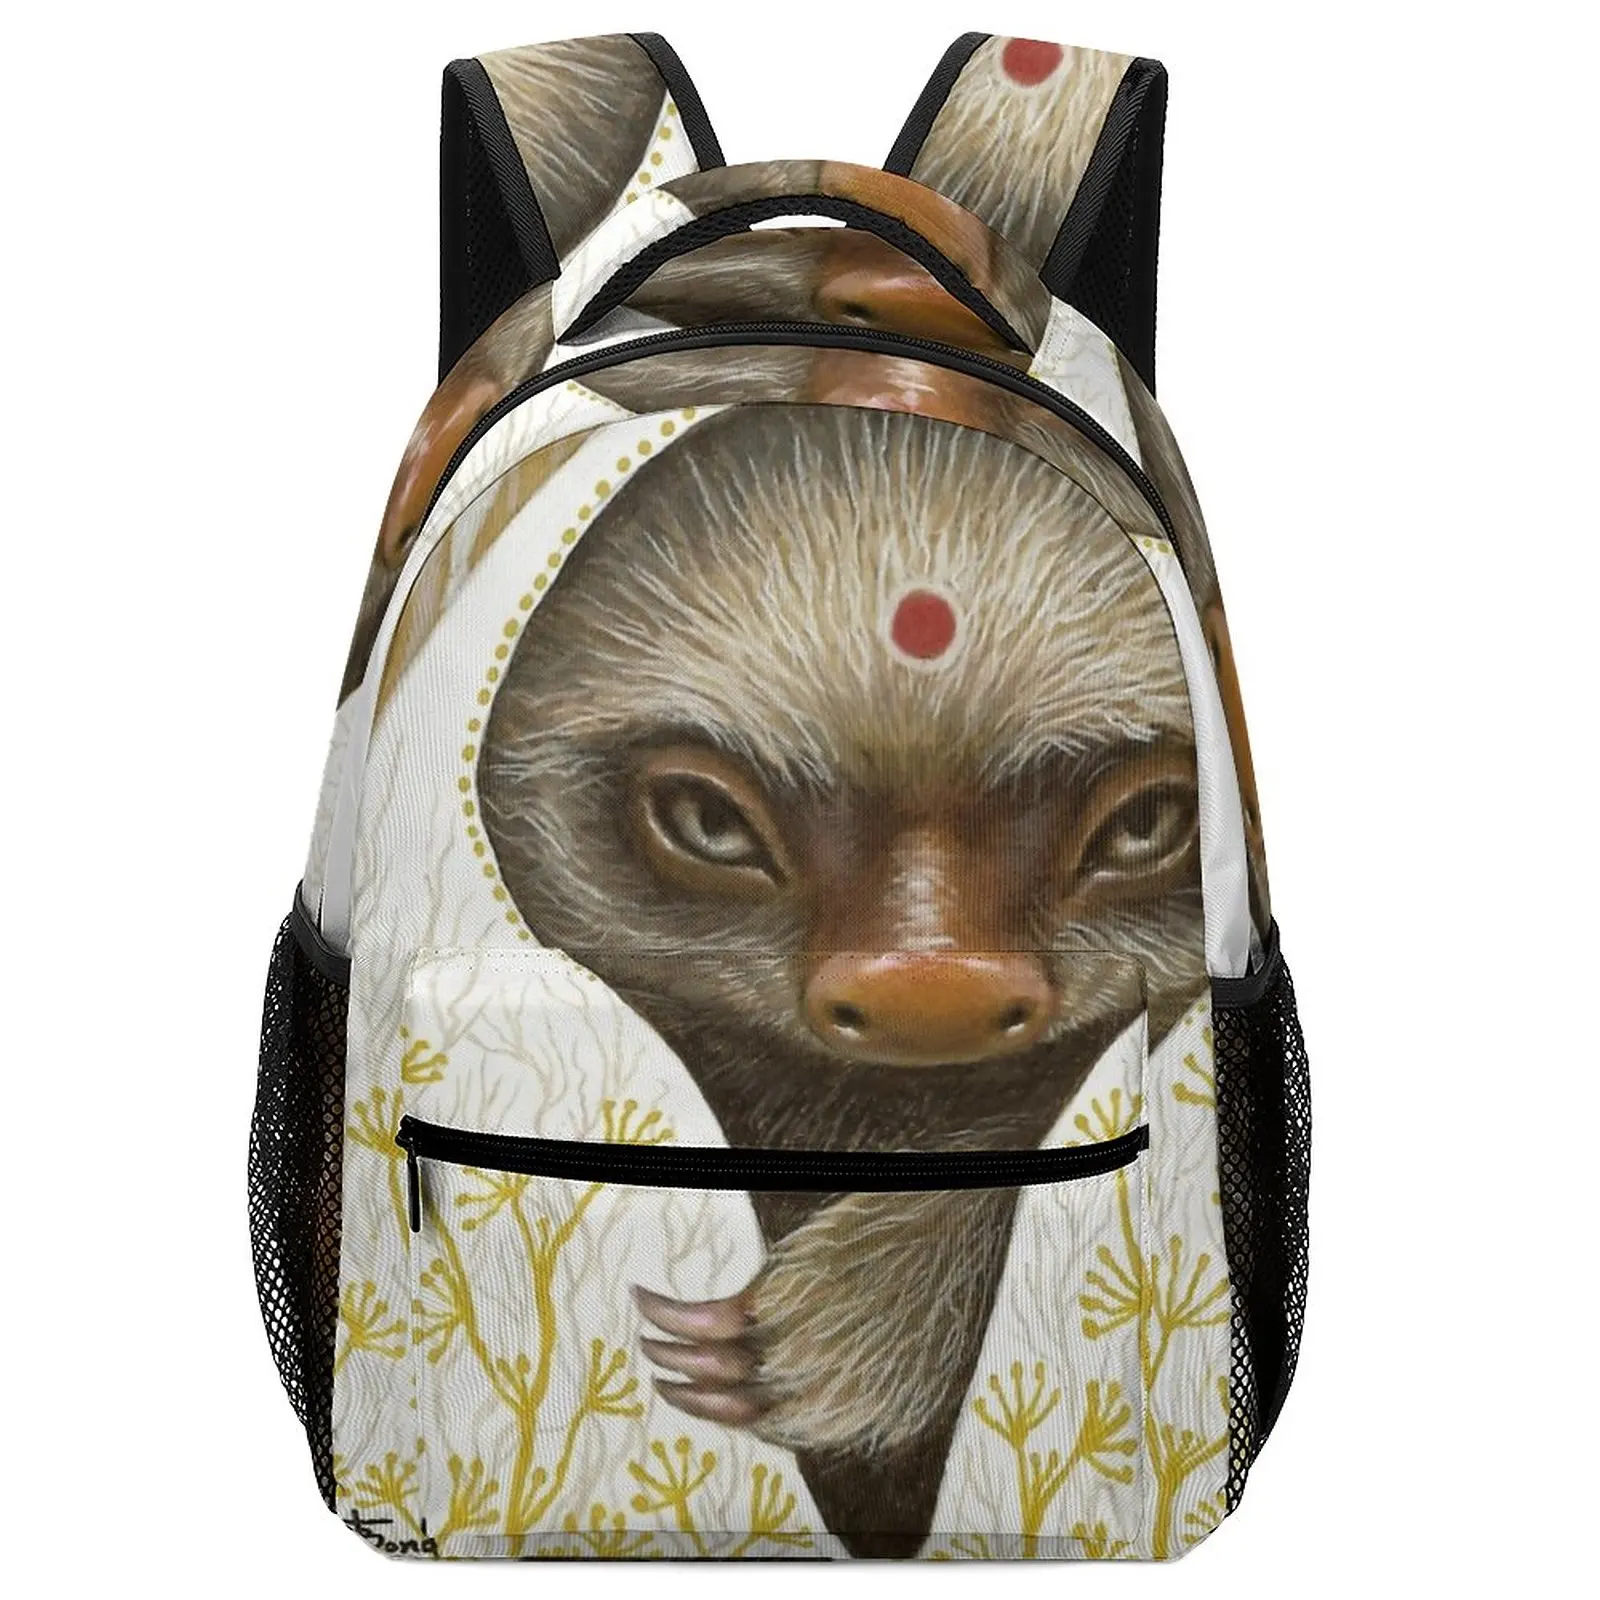 Cute Fun Medicine Sloth Girl's Schoolbag for Kids Girls Men Women School Bags Cute Bag Charm